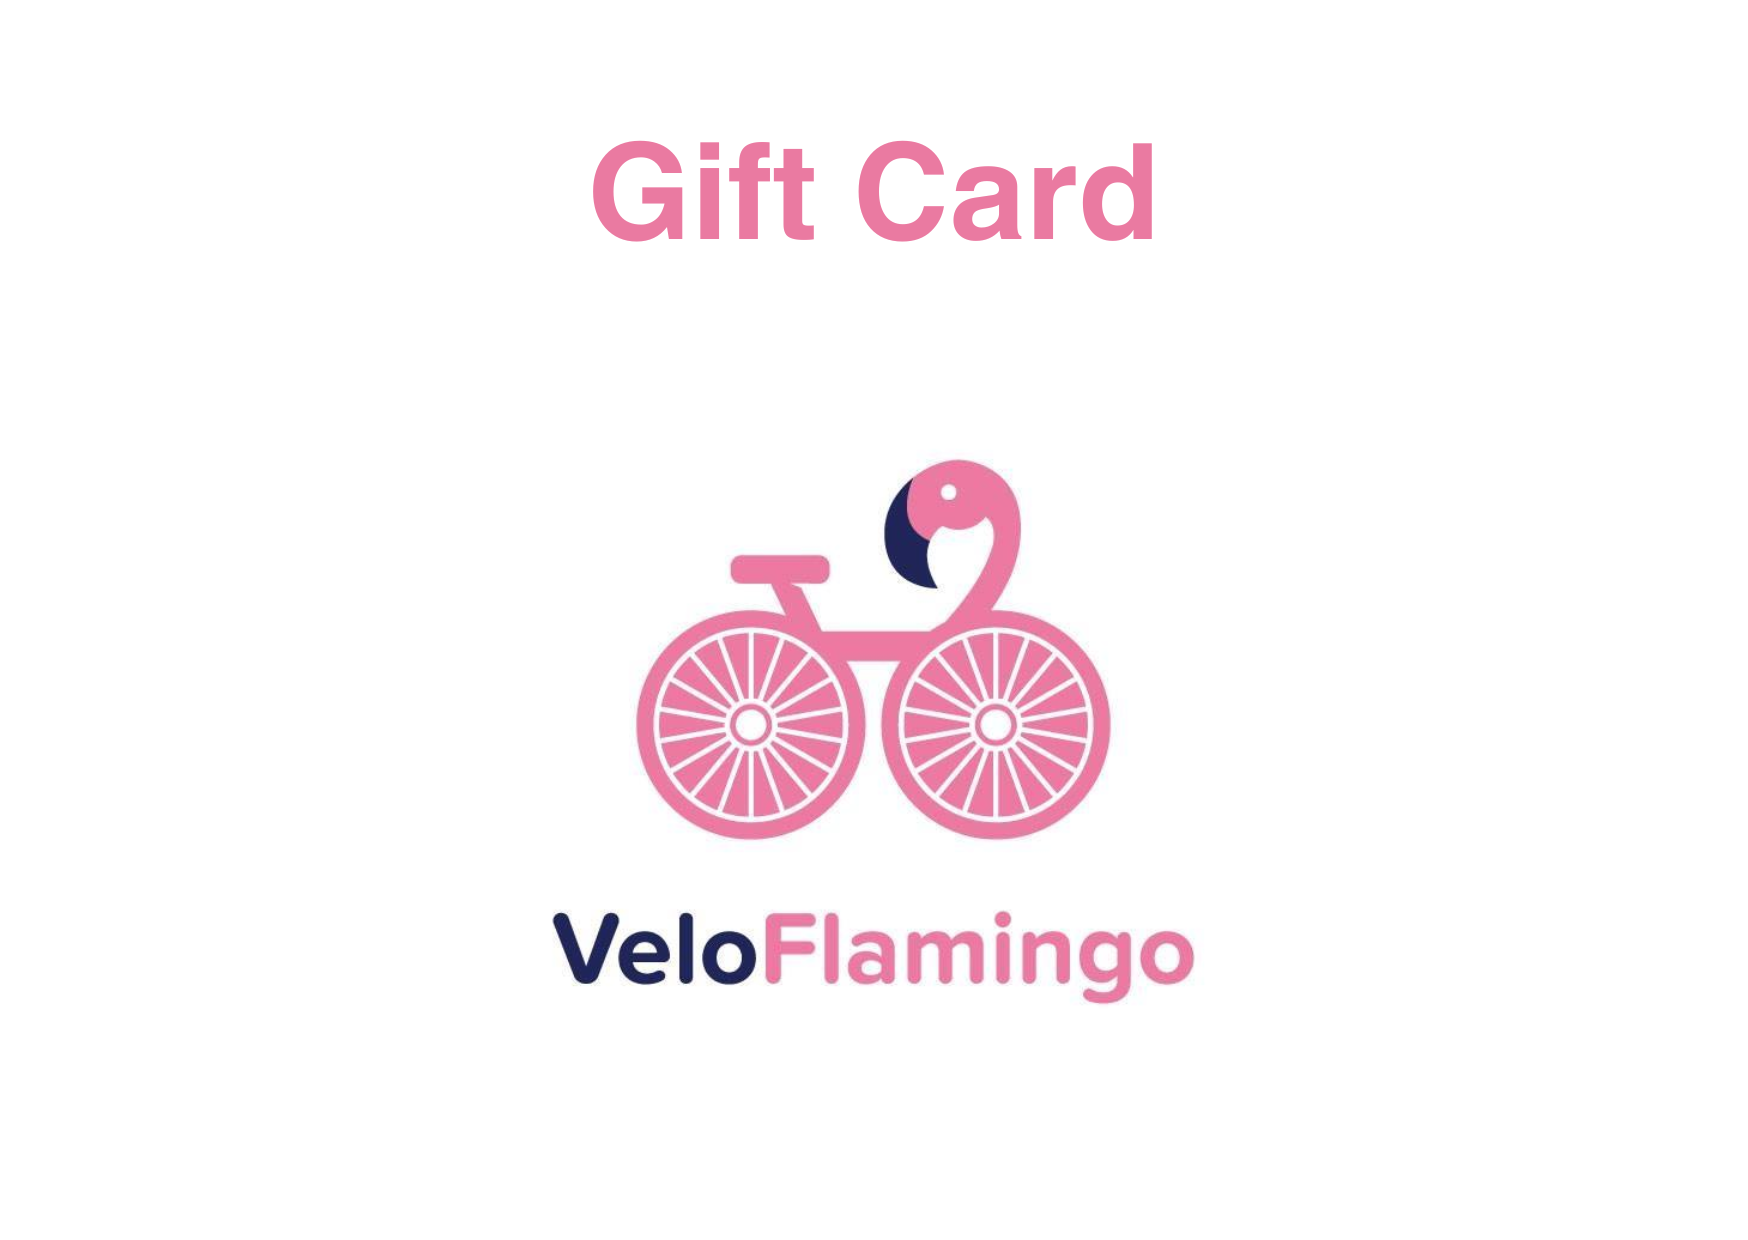 VeloFlamingo Gift Card